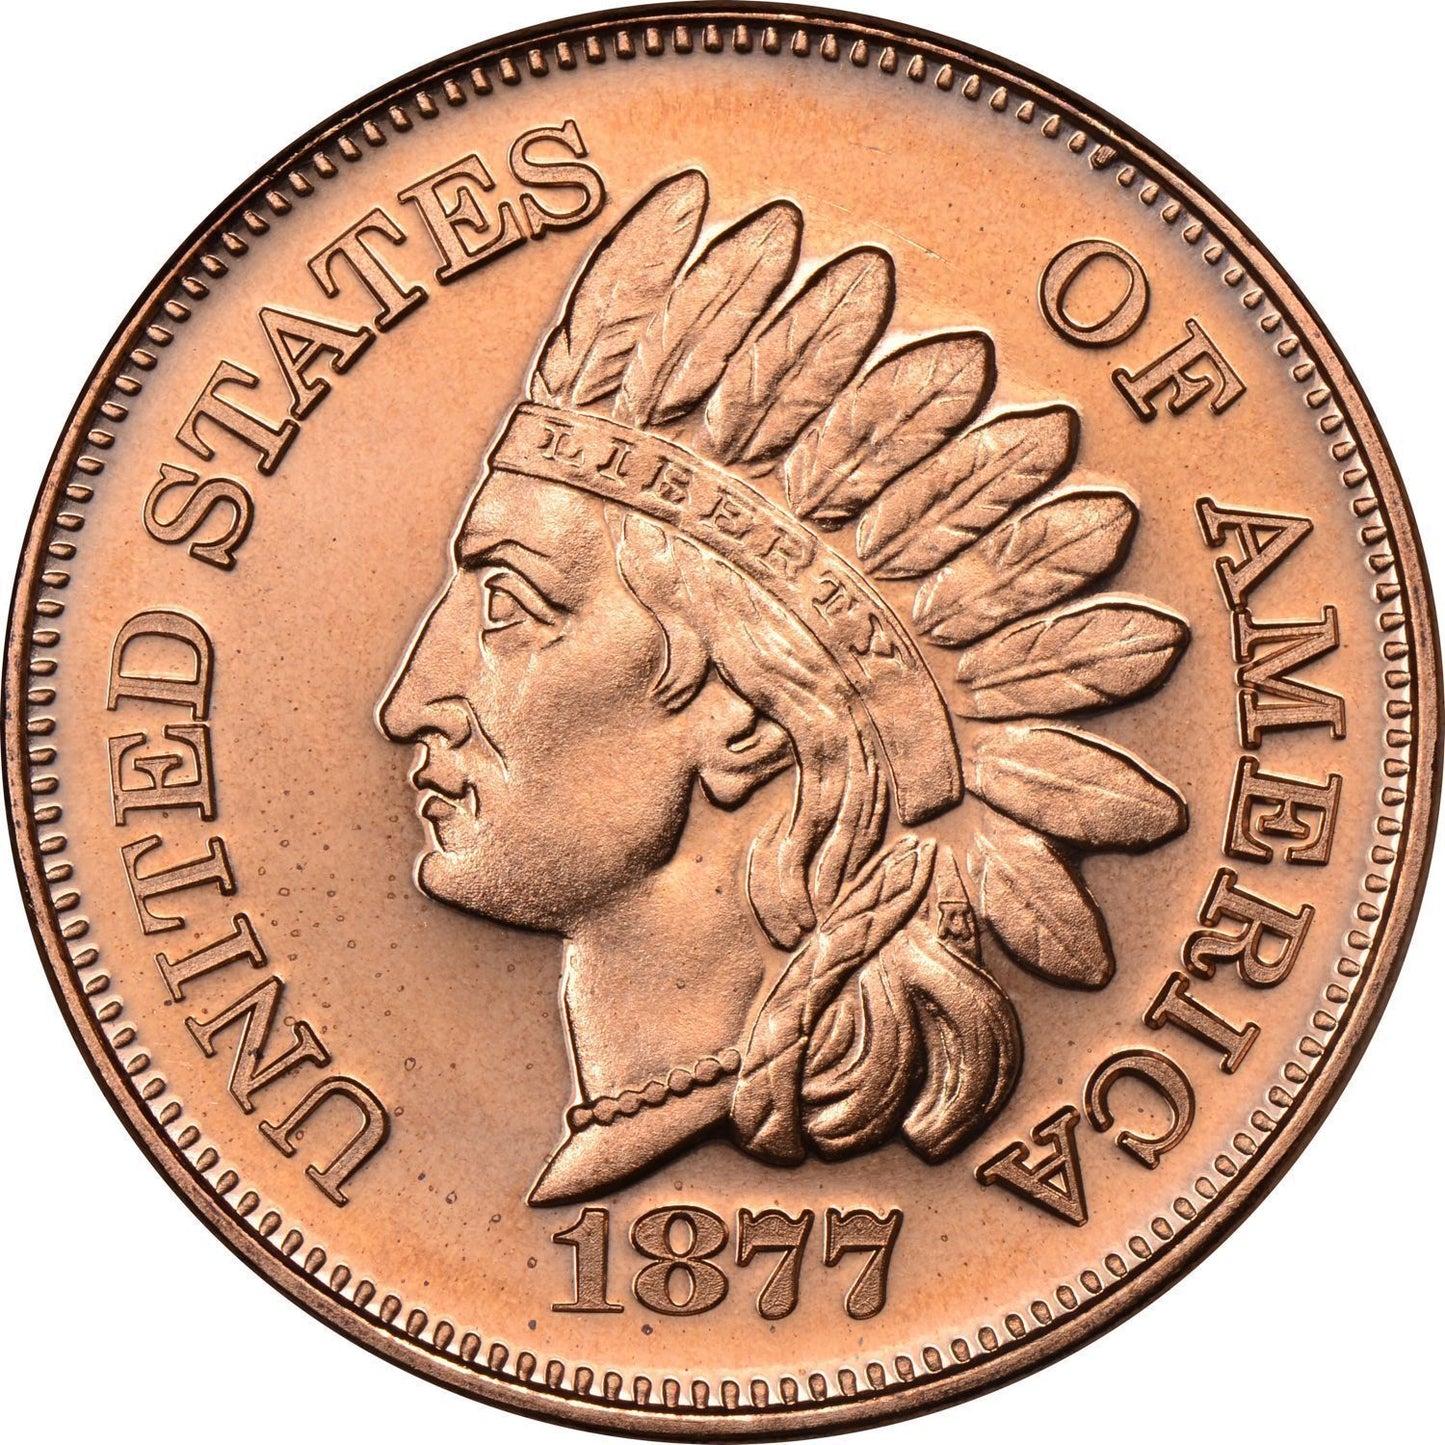 Two 1 Oz. Copper Bullion Coins Wooden Box